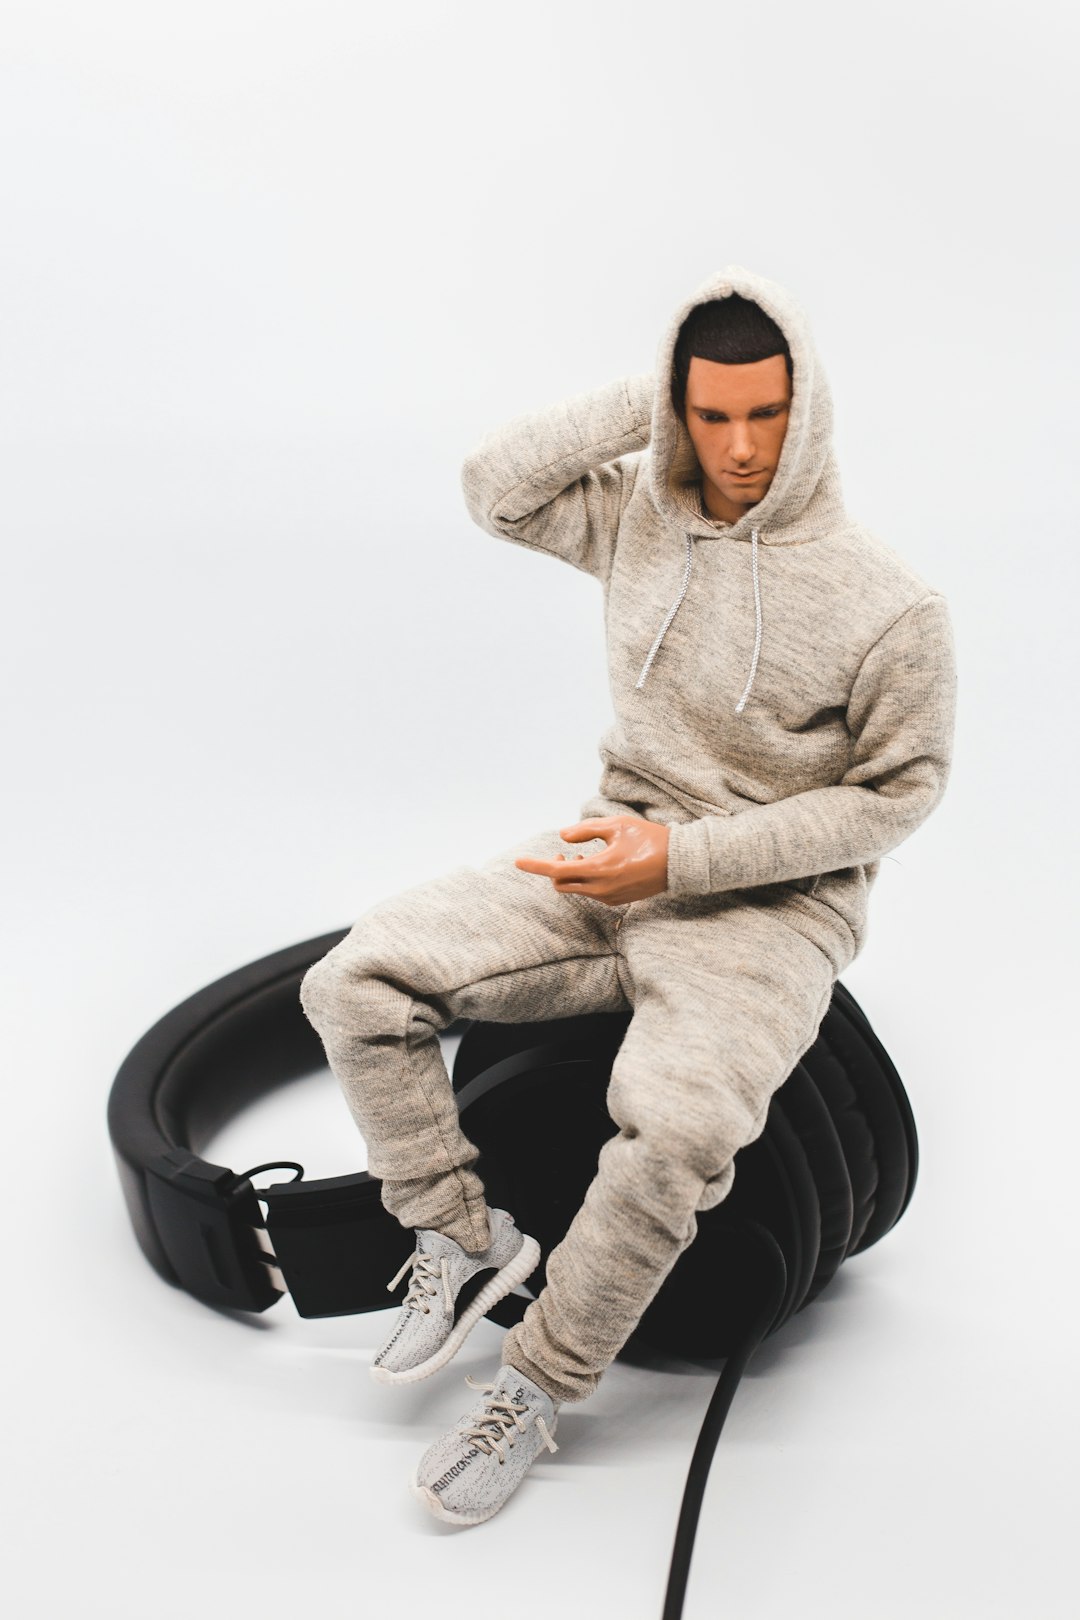 man in gray hoodie and gray pants sitting on black wheel chair